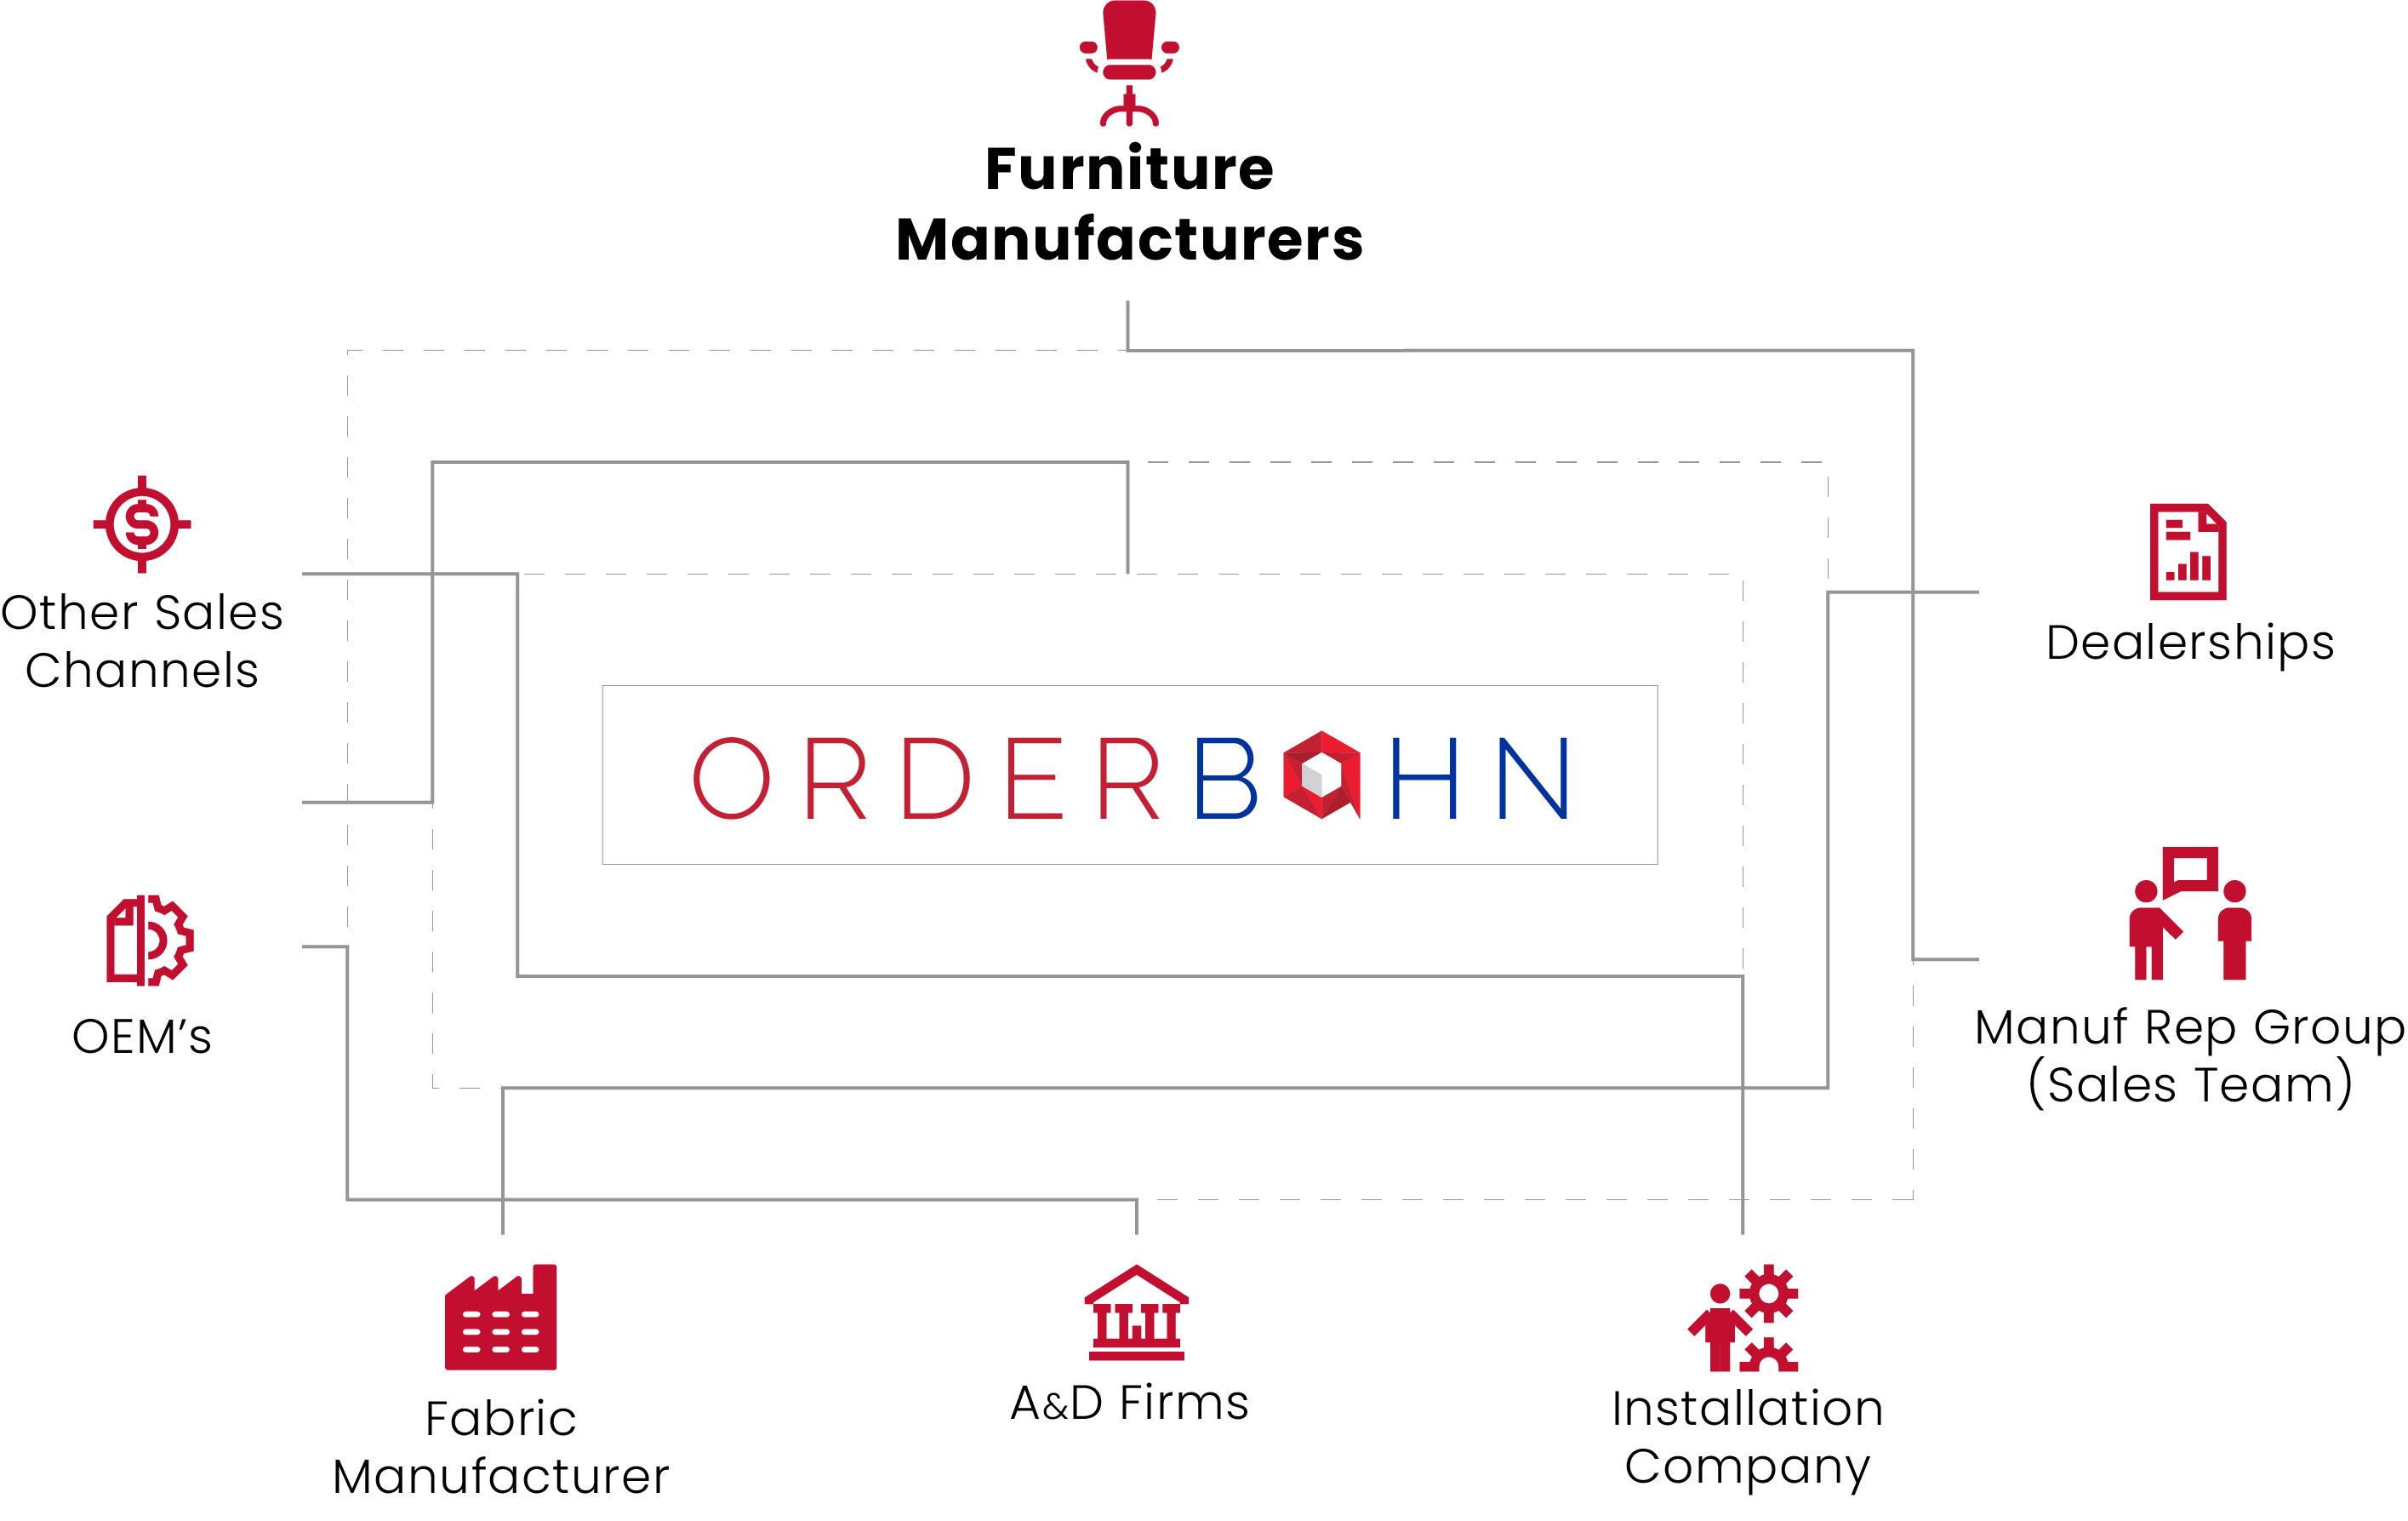 OrderBahn_Ecosystem_Furniture Manufacturers_2